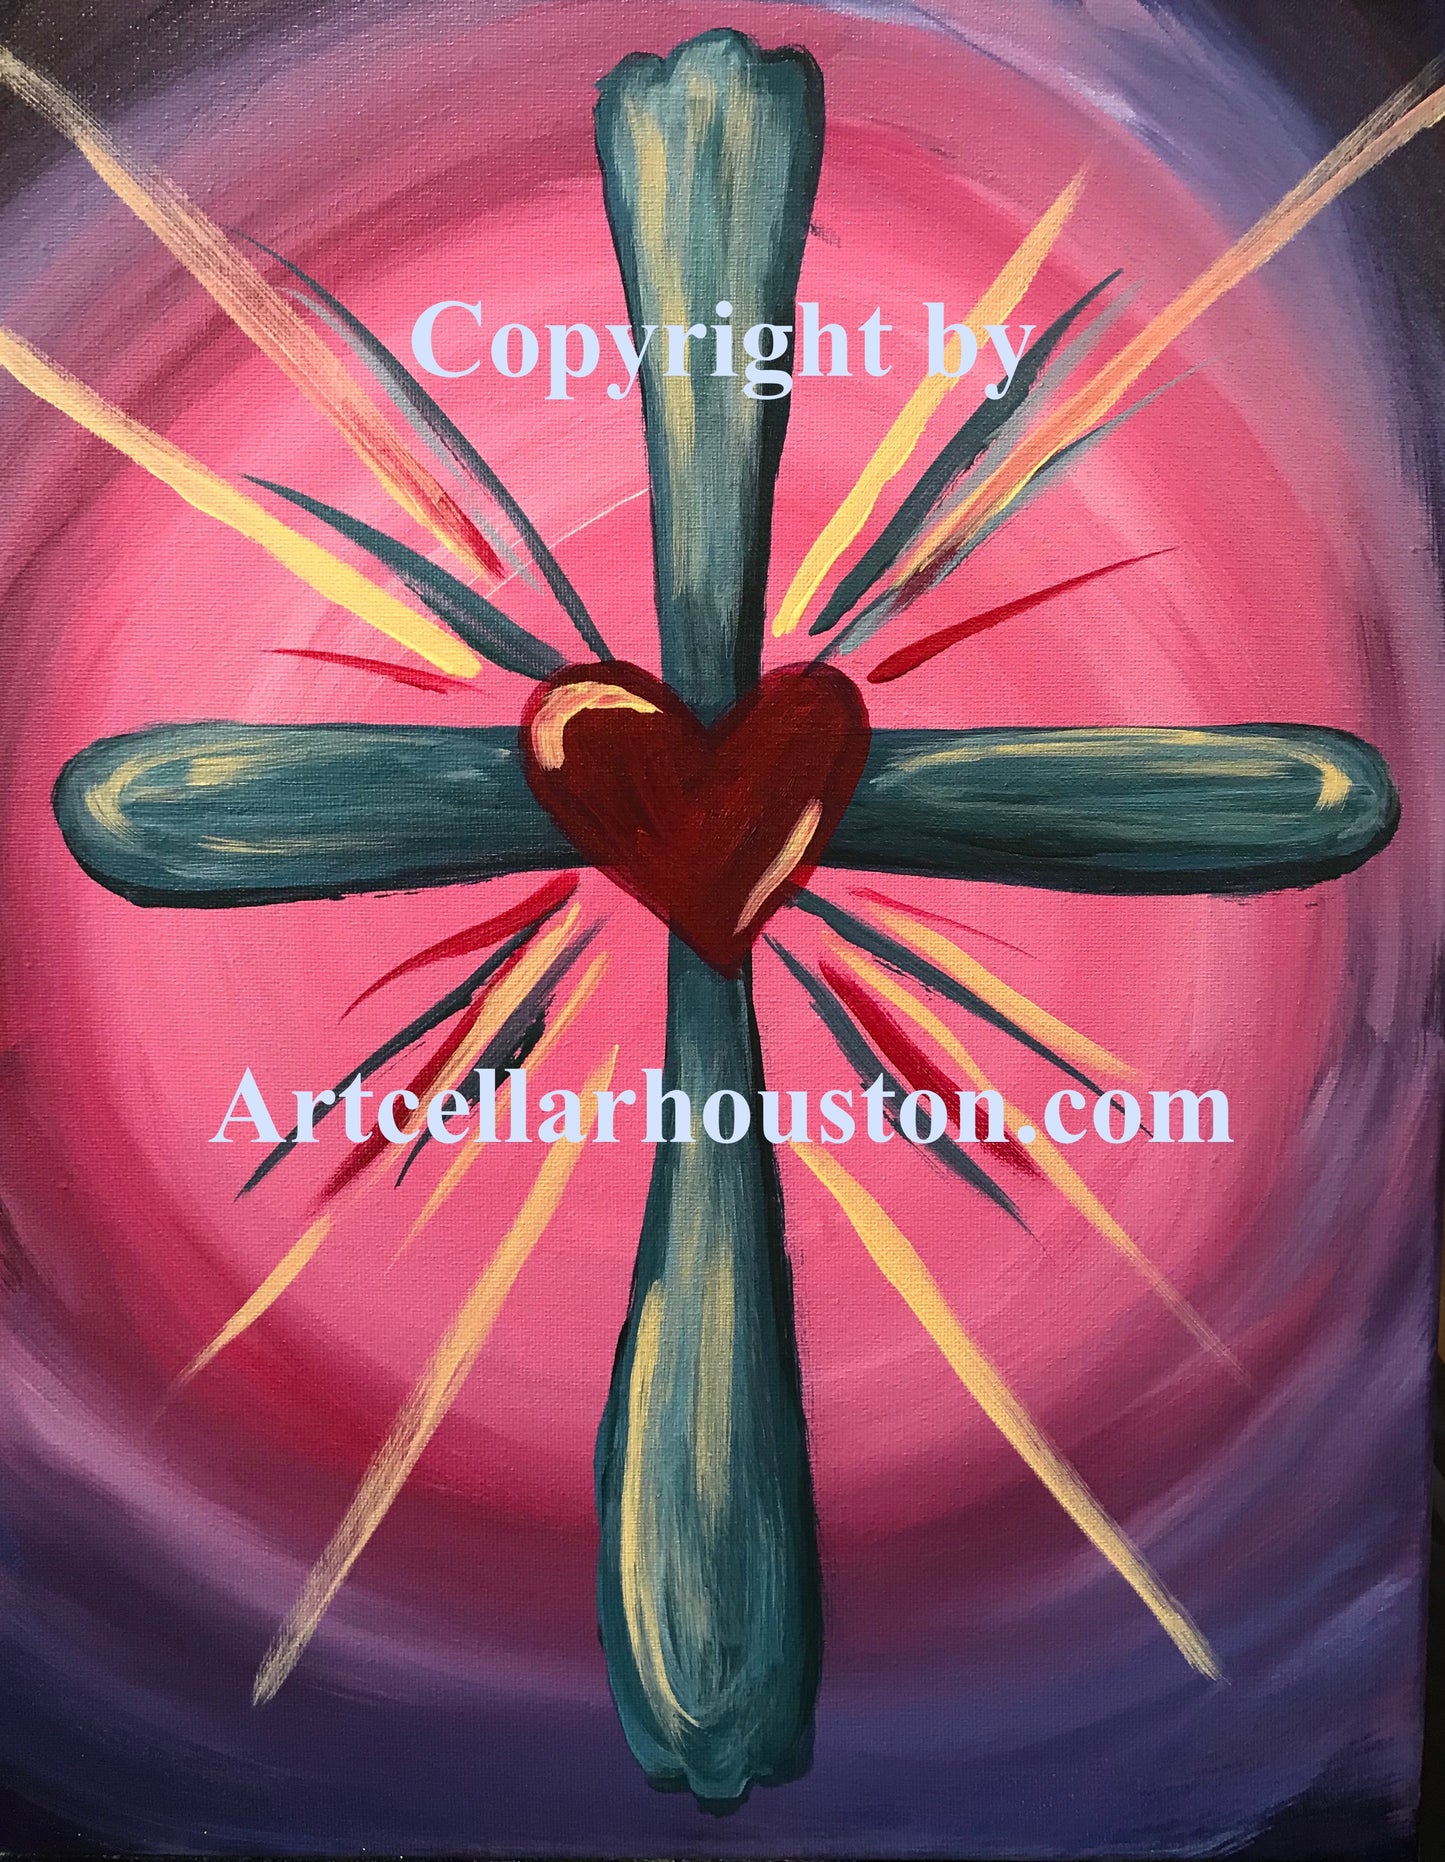 Wed, Feb 5, 4-6pm "Cross My Heart" Public Houston Kids Painting Class